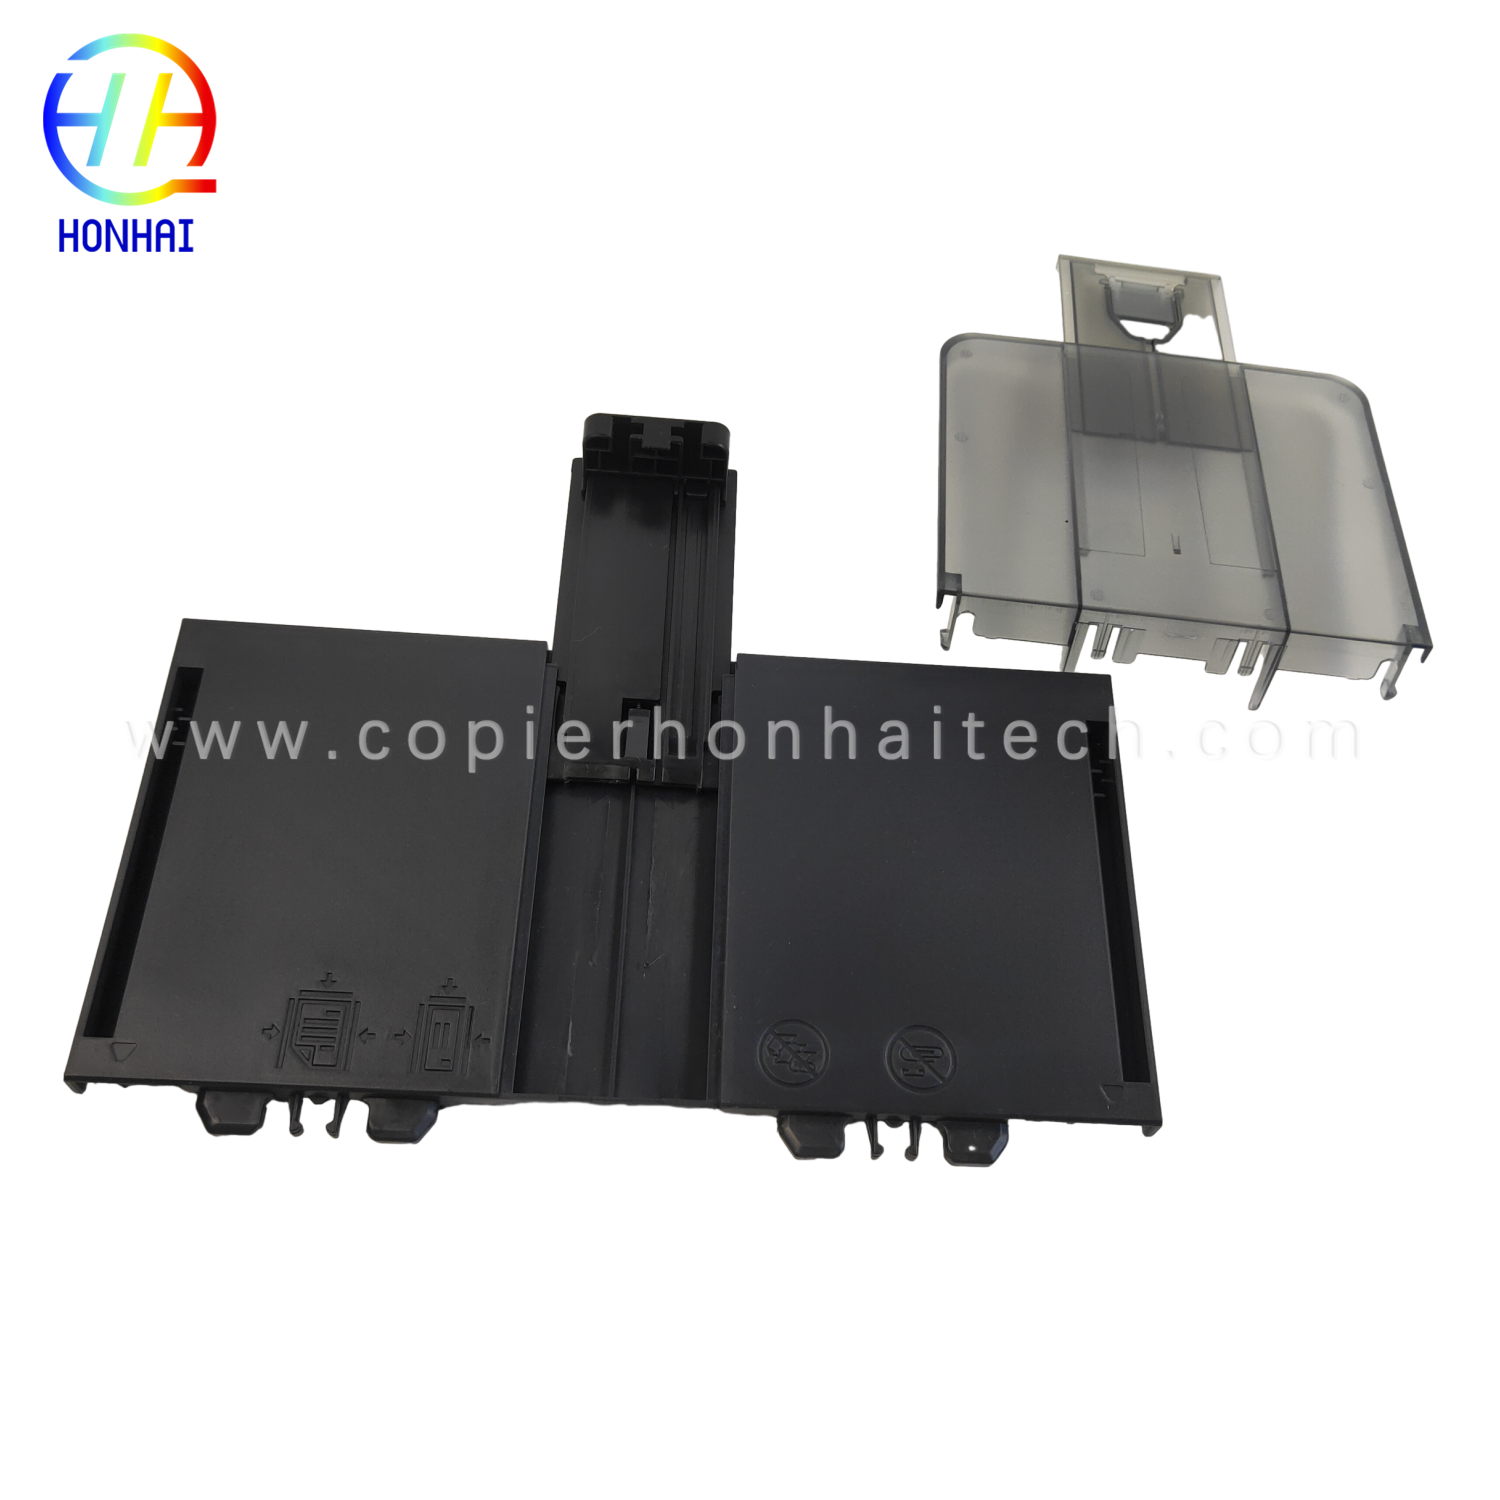 https://www.copierhonhaitech.com/receive-tray-and-paper-tray-set-for-hp-laserjet-pro-mfp-225dn-product/